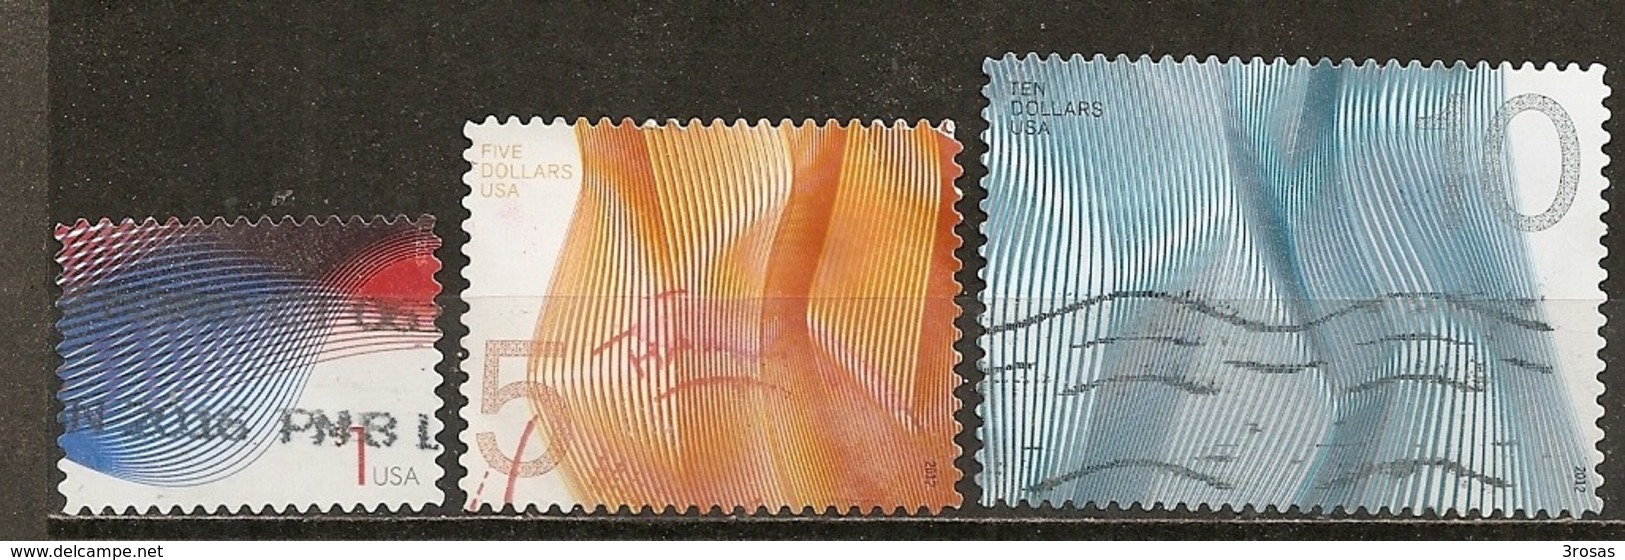 Etats-Unis USA 2012 $1, $5 & $10 Obl - Used Stamps